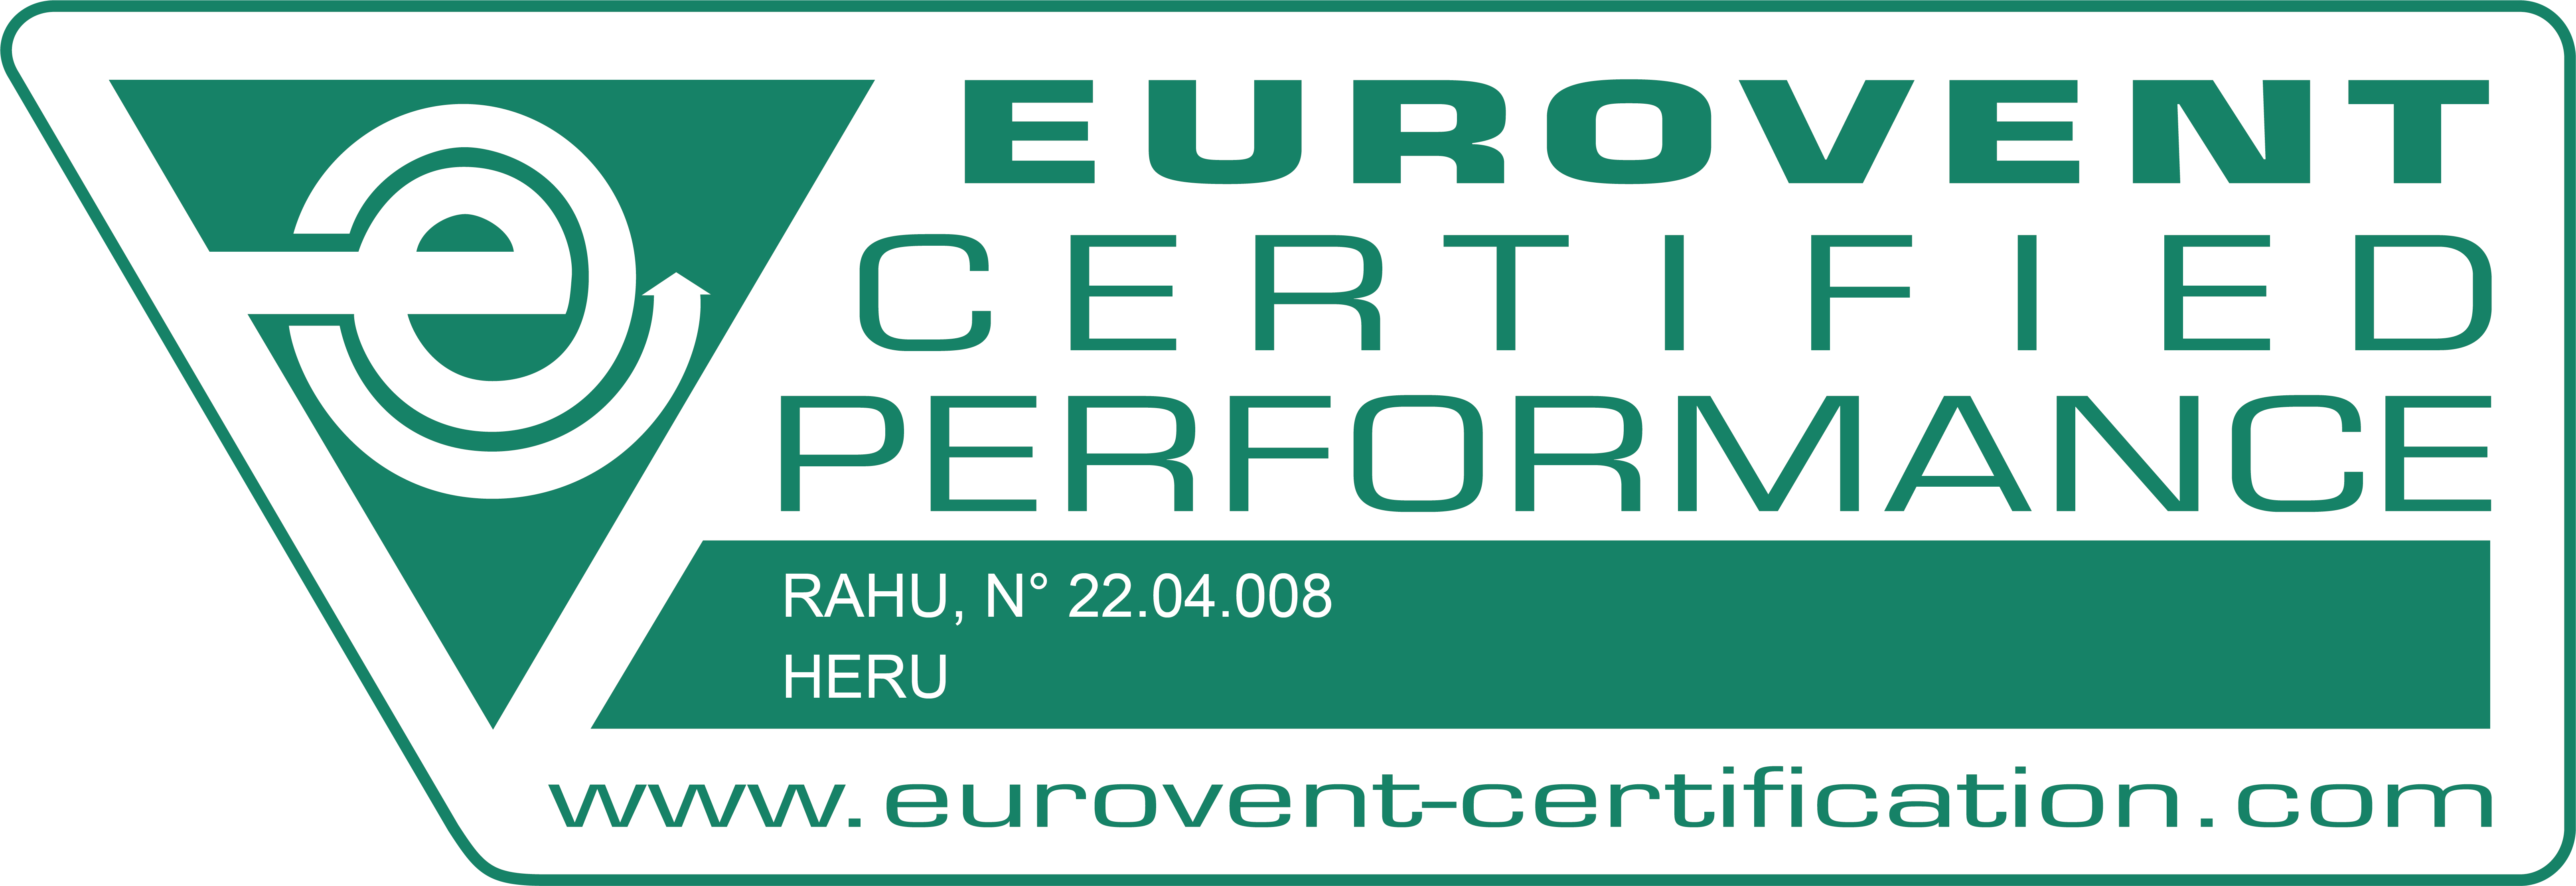 Eurovent label